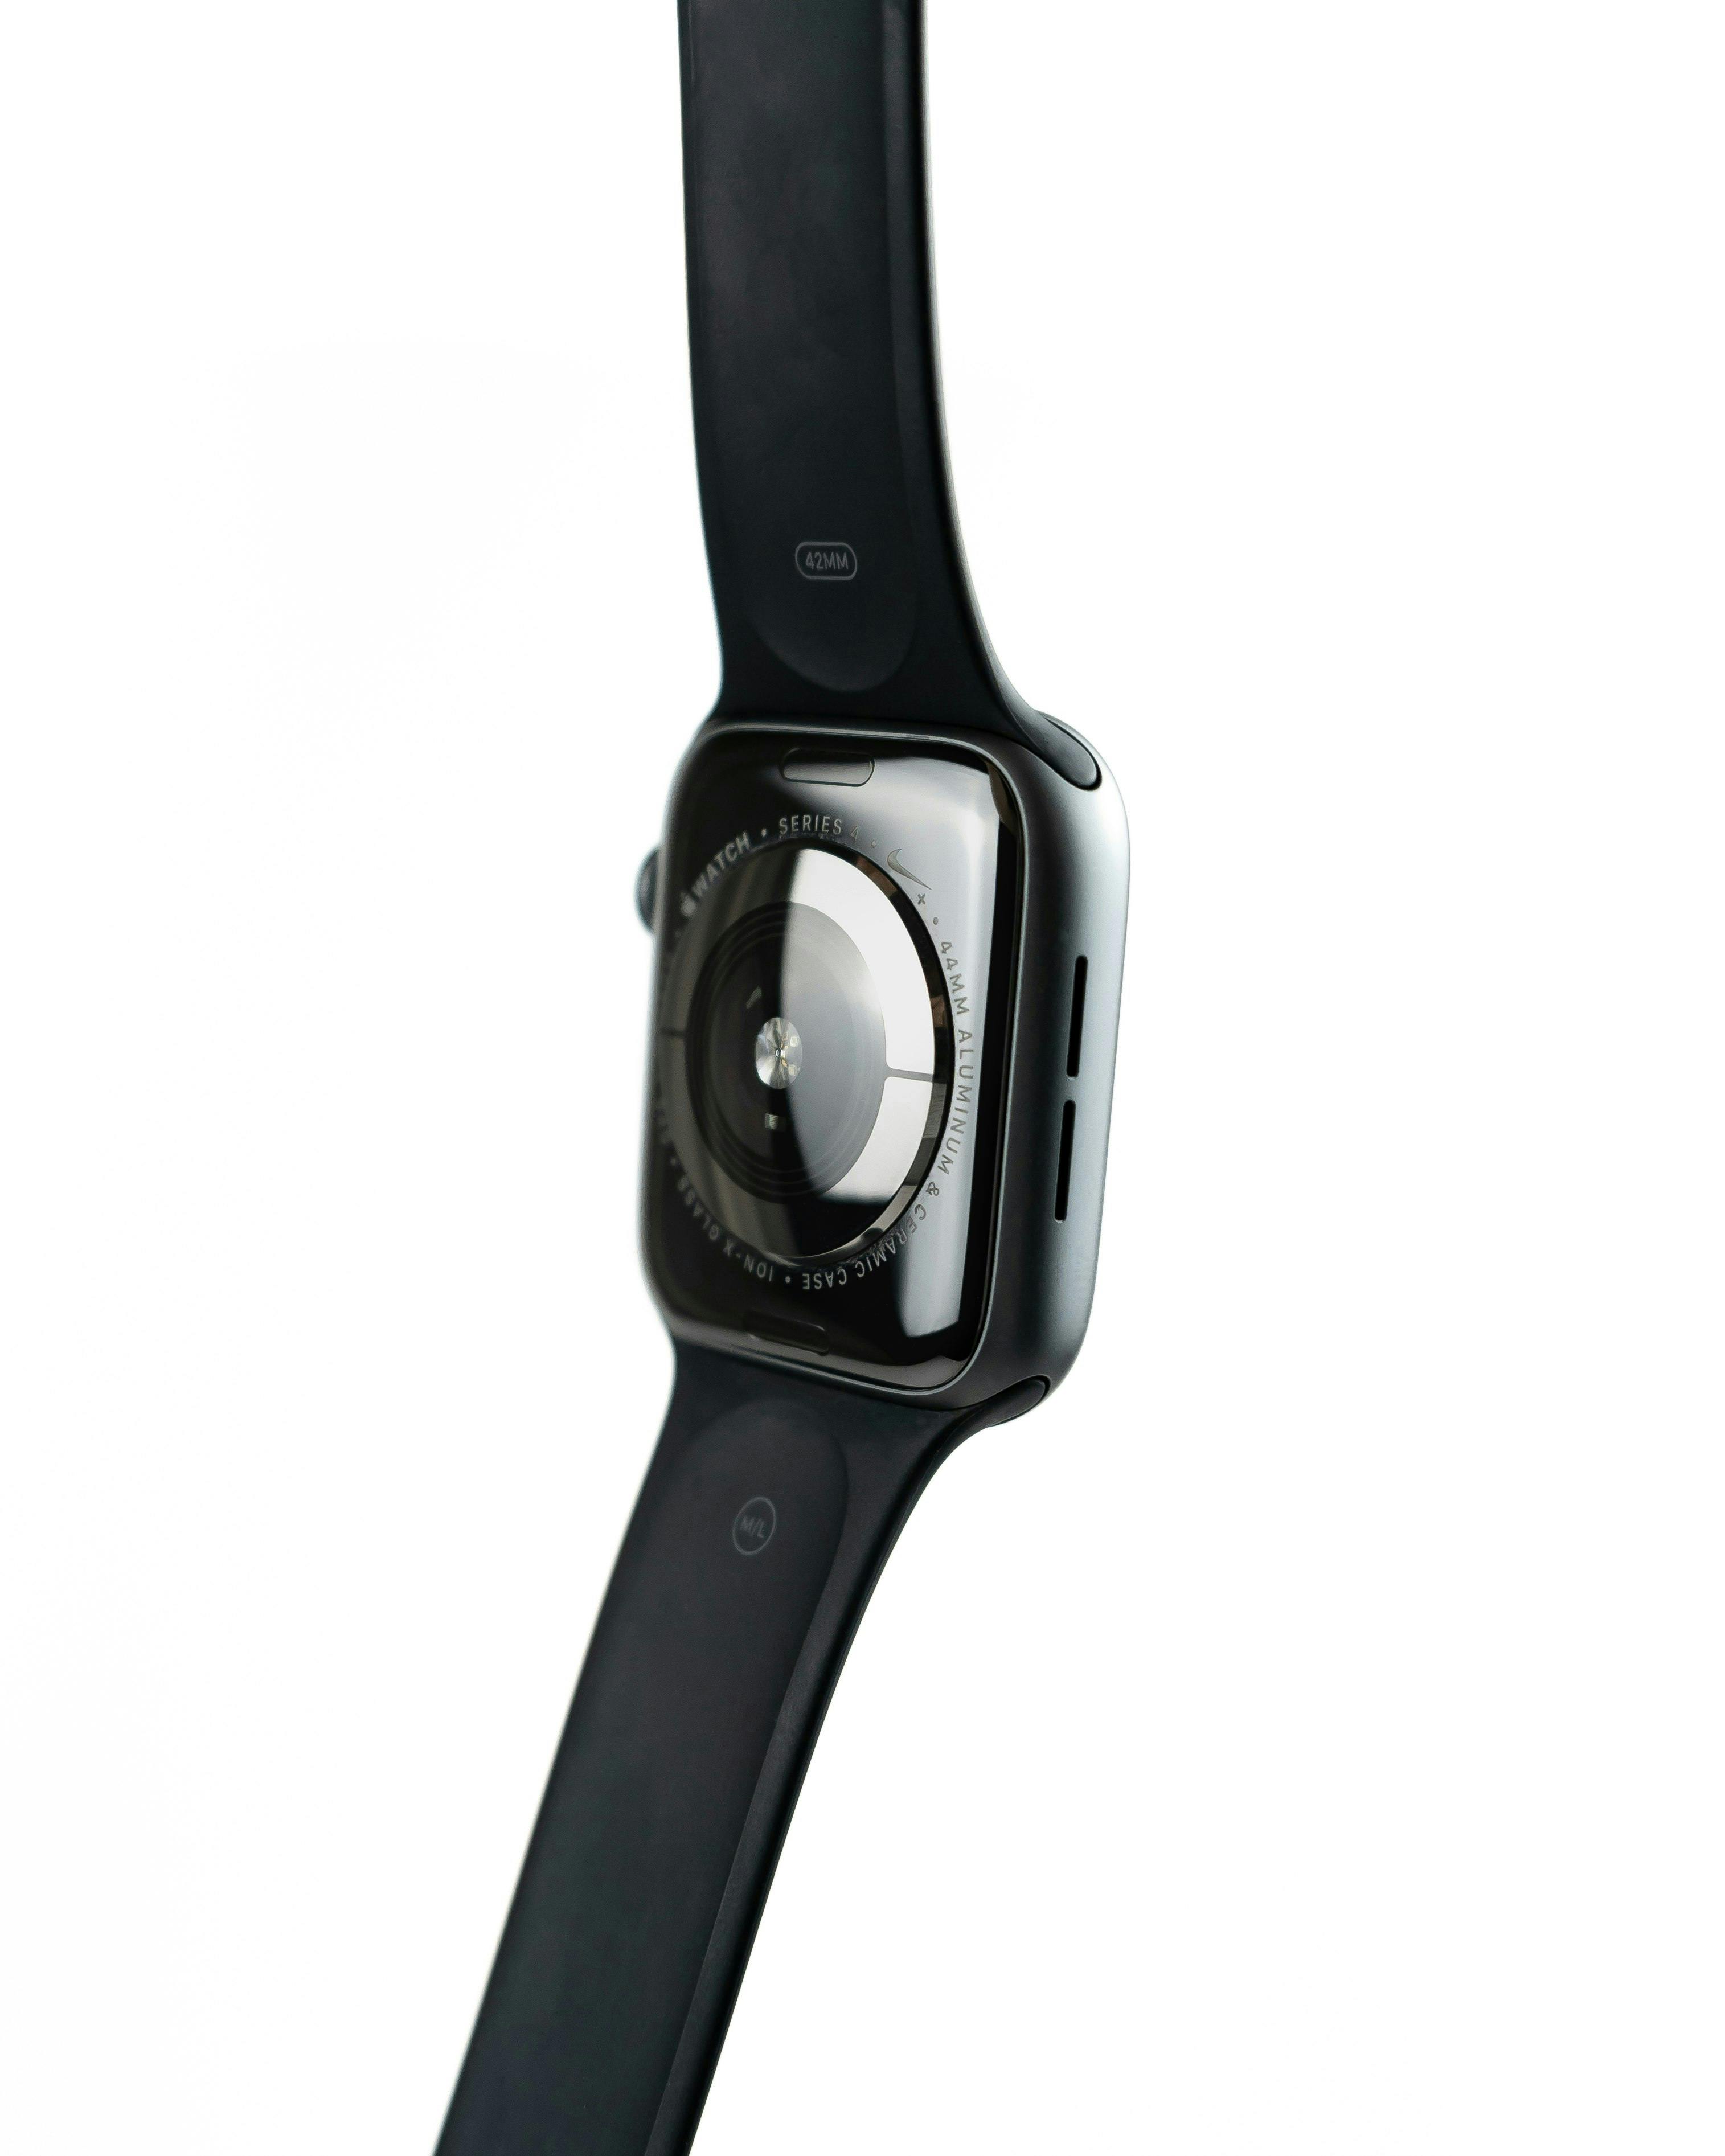 Photo of an Apple Watch